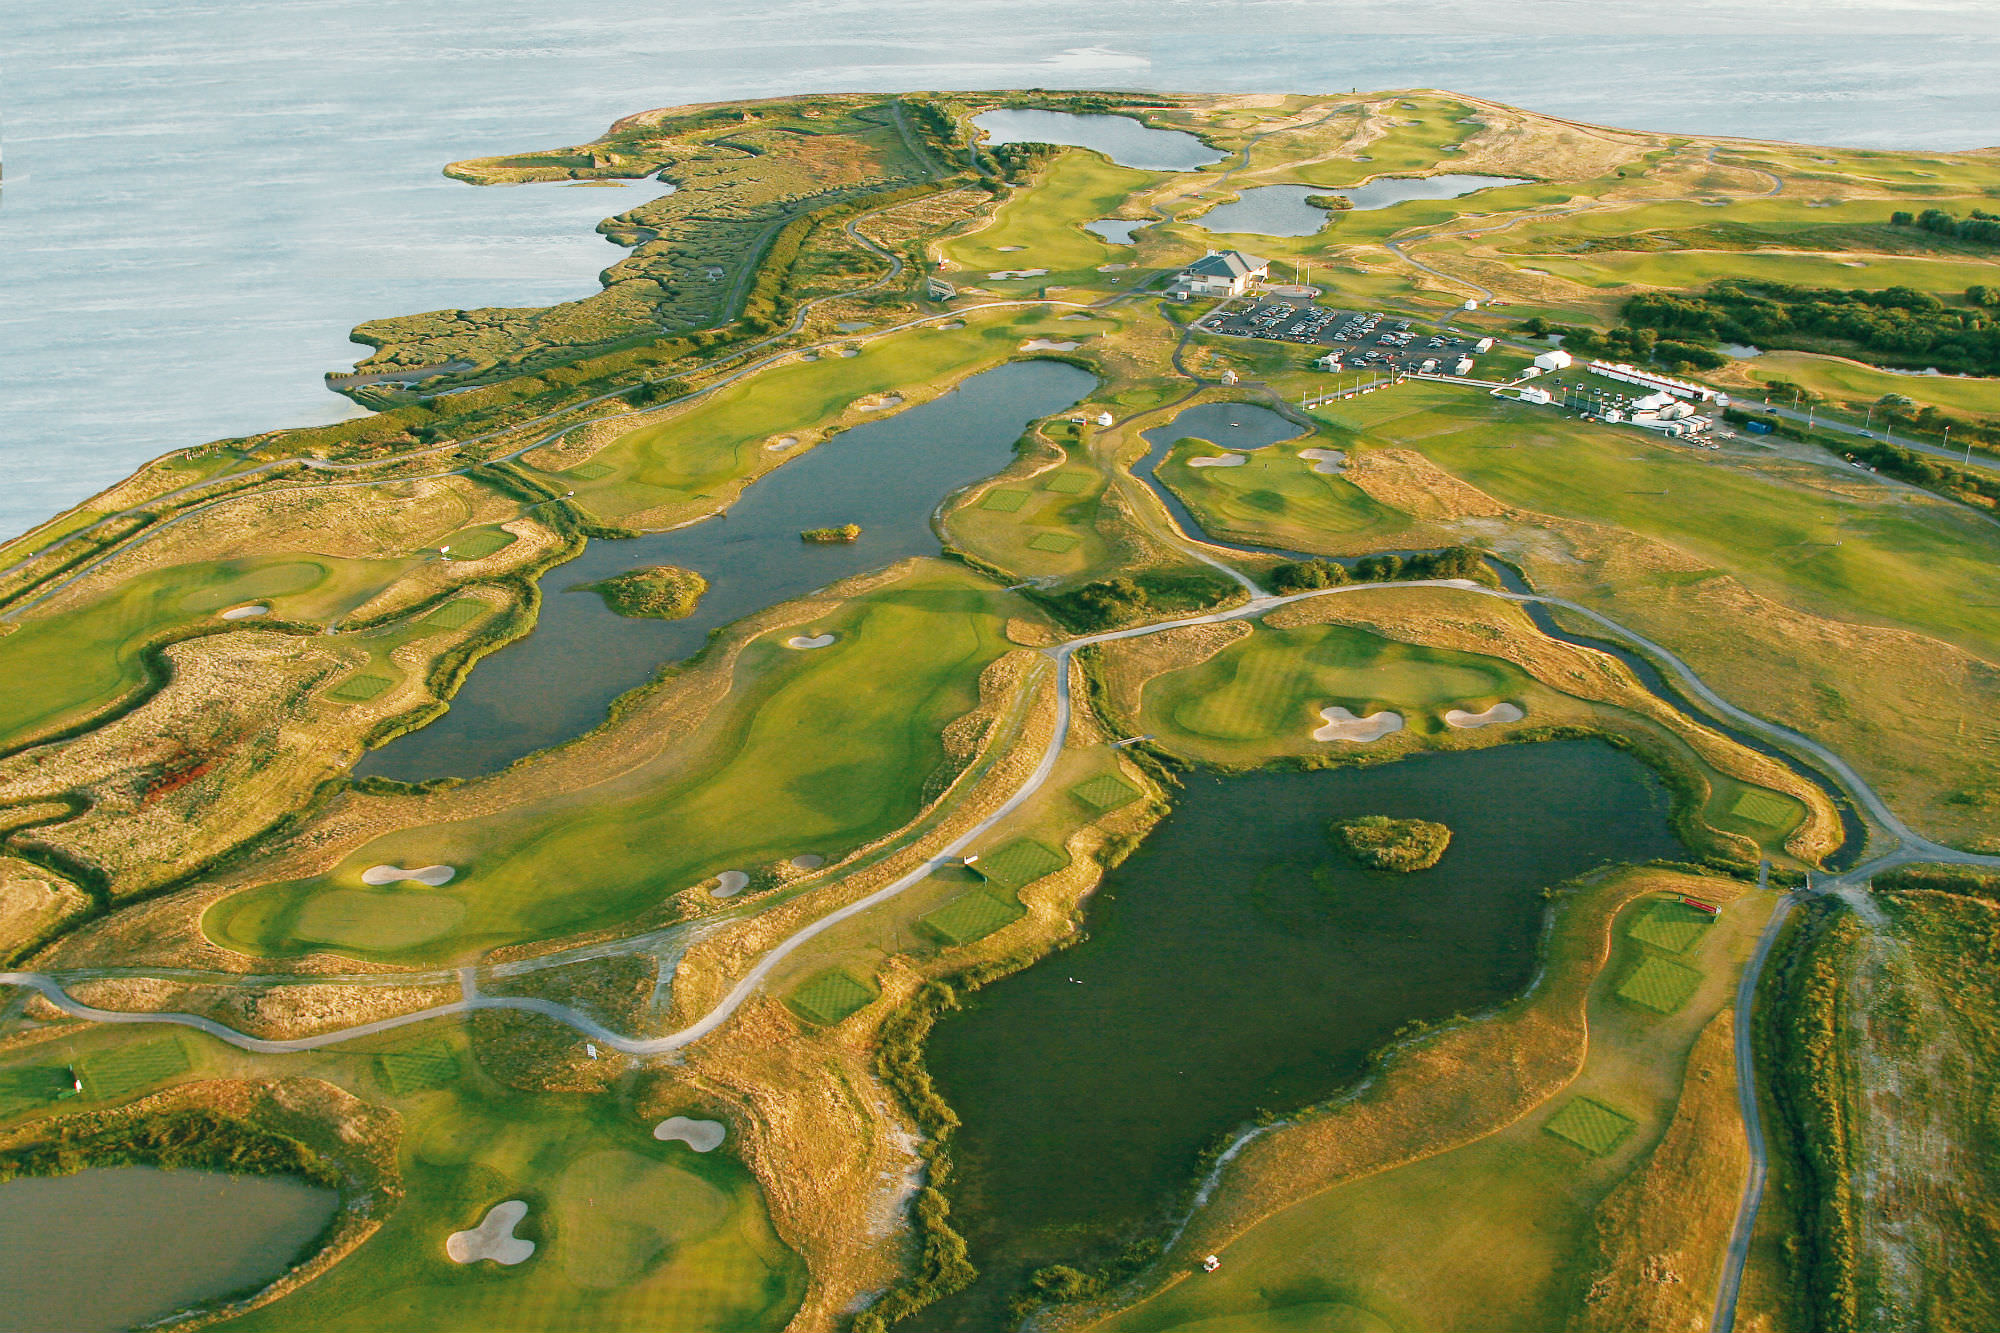 Machynys Peninsula golf course review